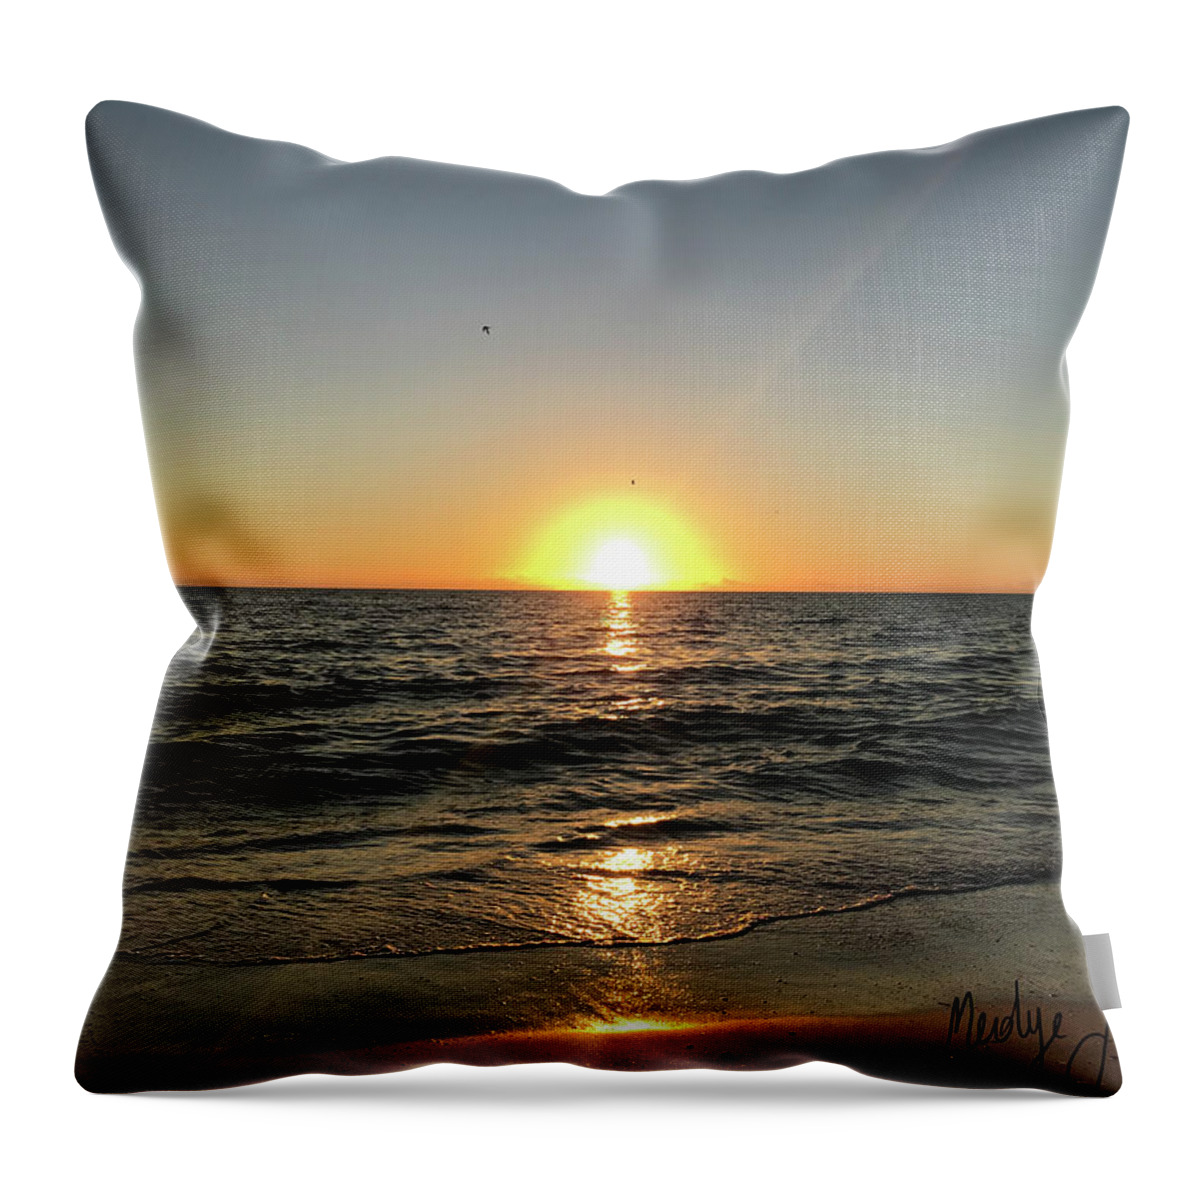 Sunset Throw Pillow featuring the photograph December Sunset on Lido Beach by Medge Jaspan